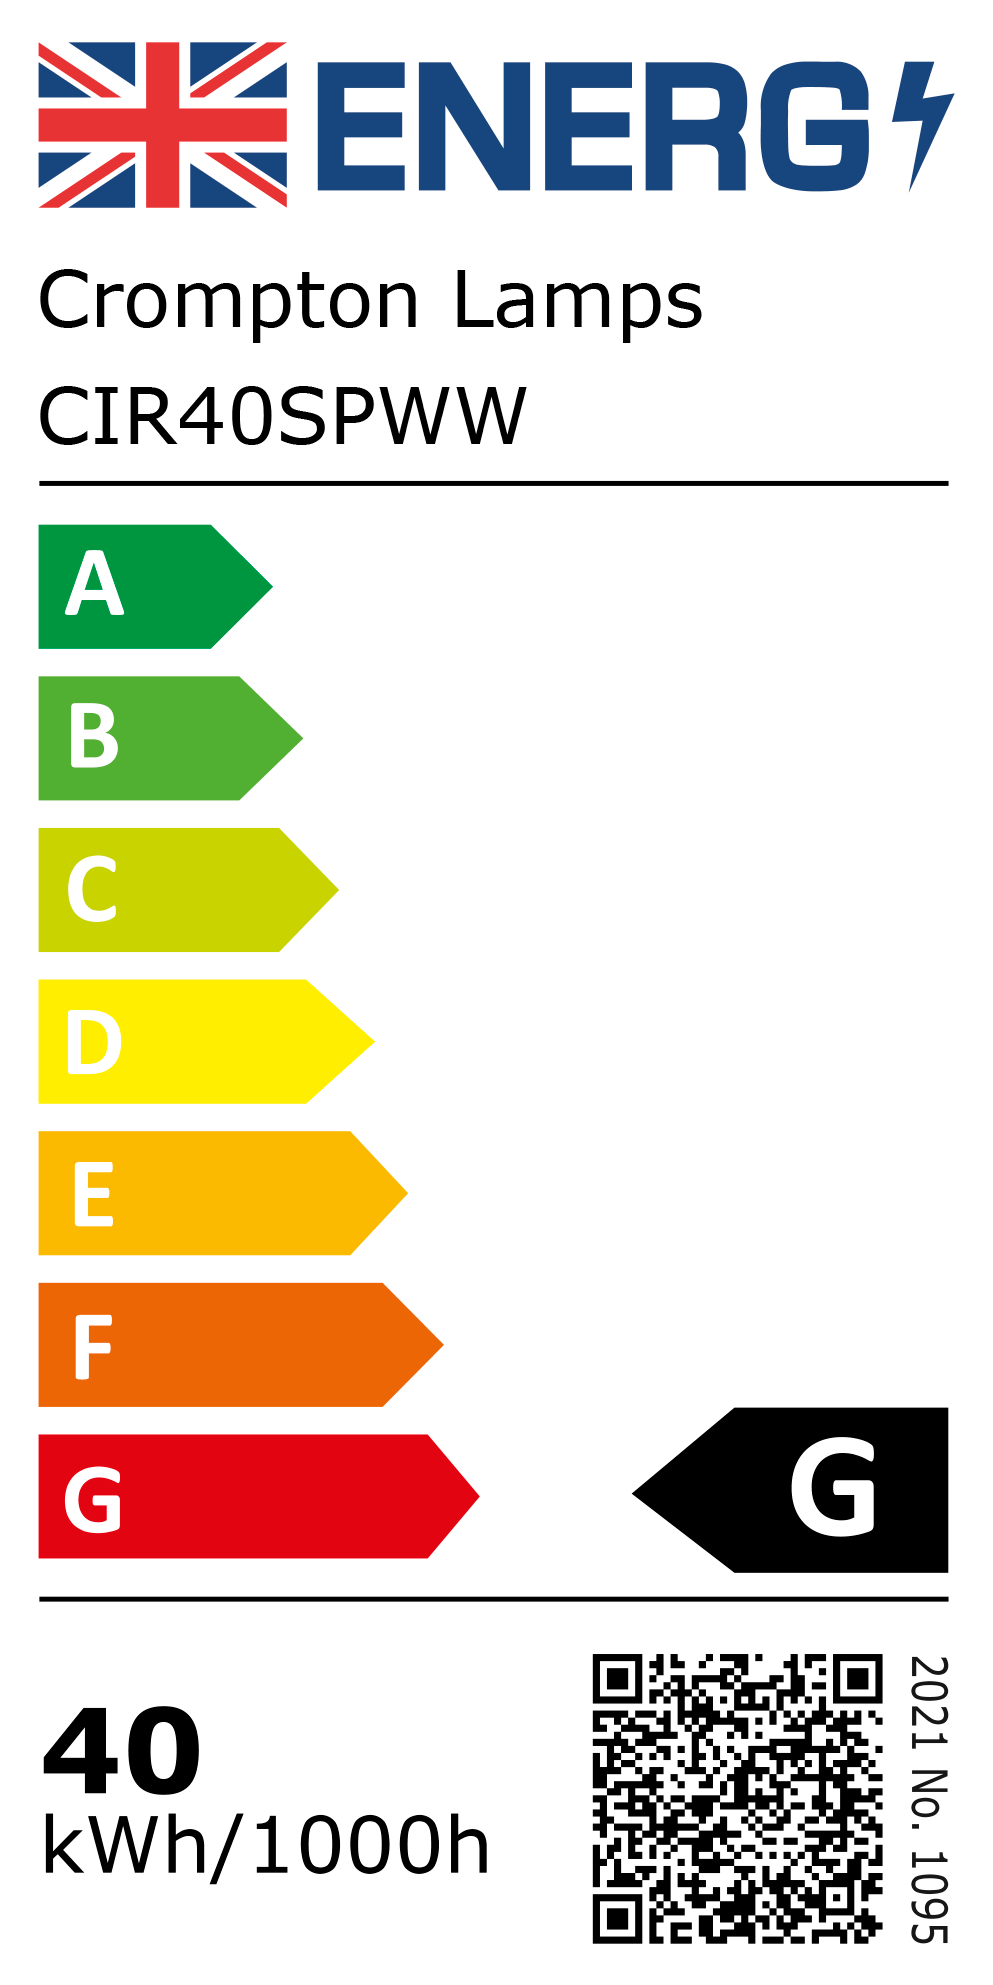 New 2021 Energy Rating Label: Stock Code CIR40SPWW